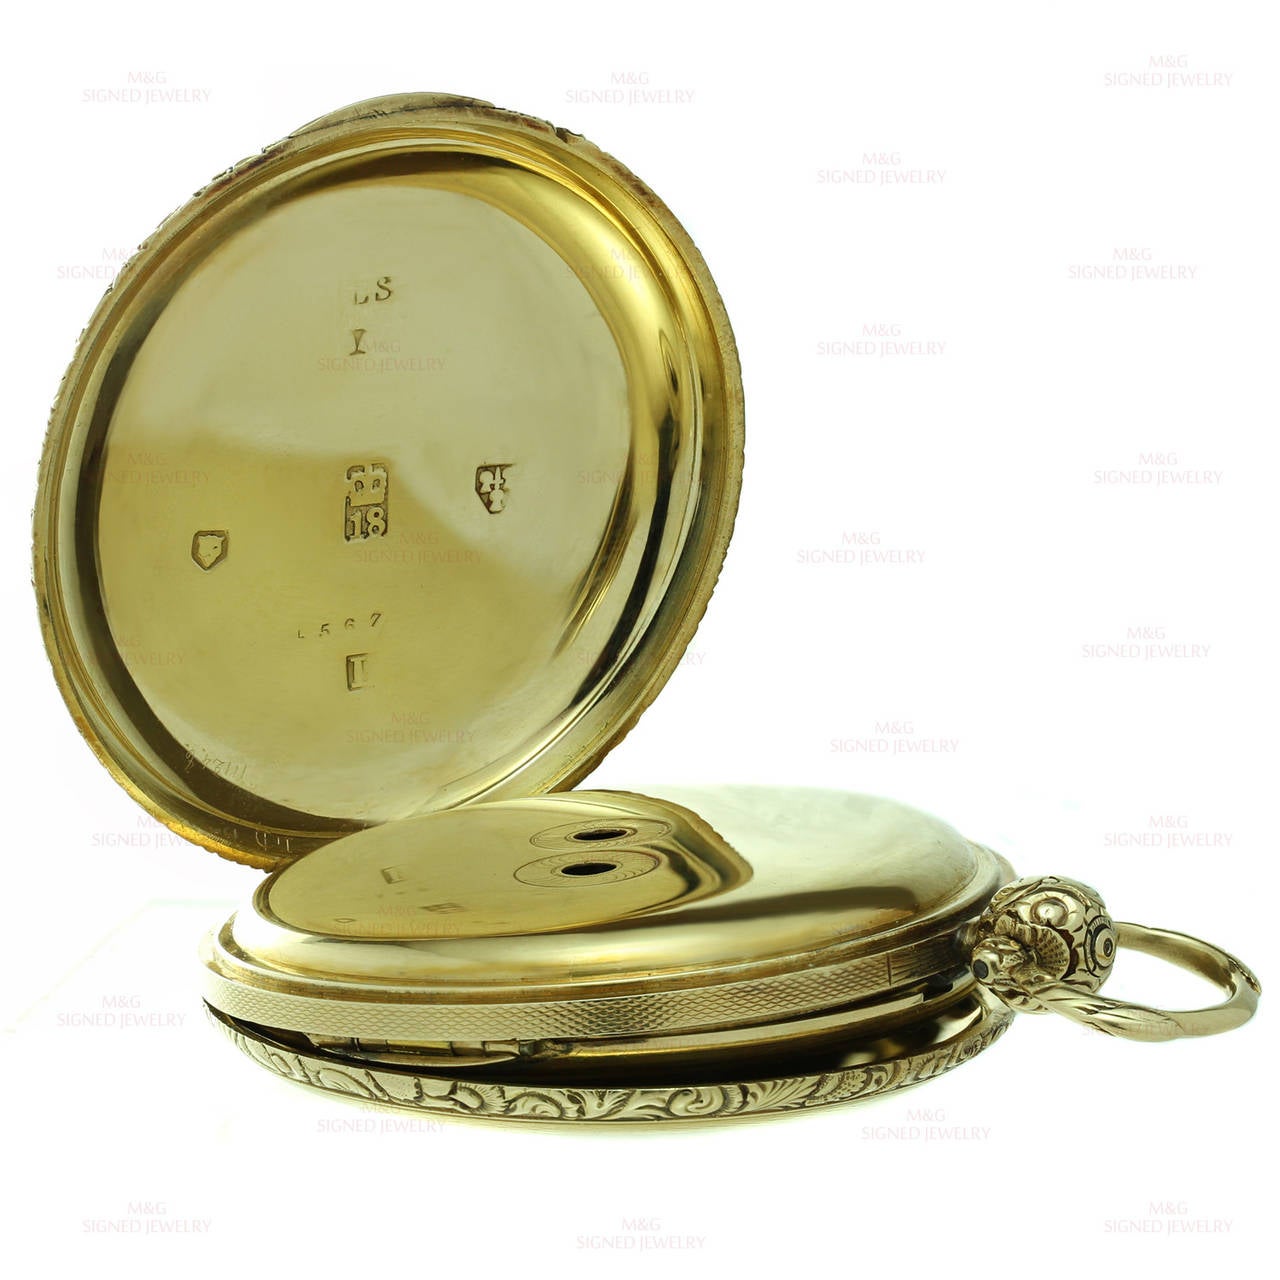 1890 pocket watch